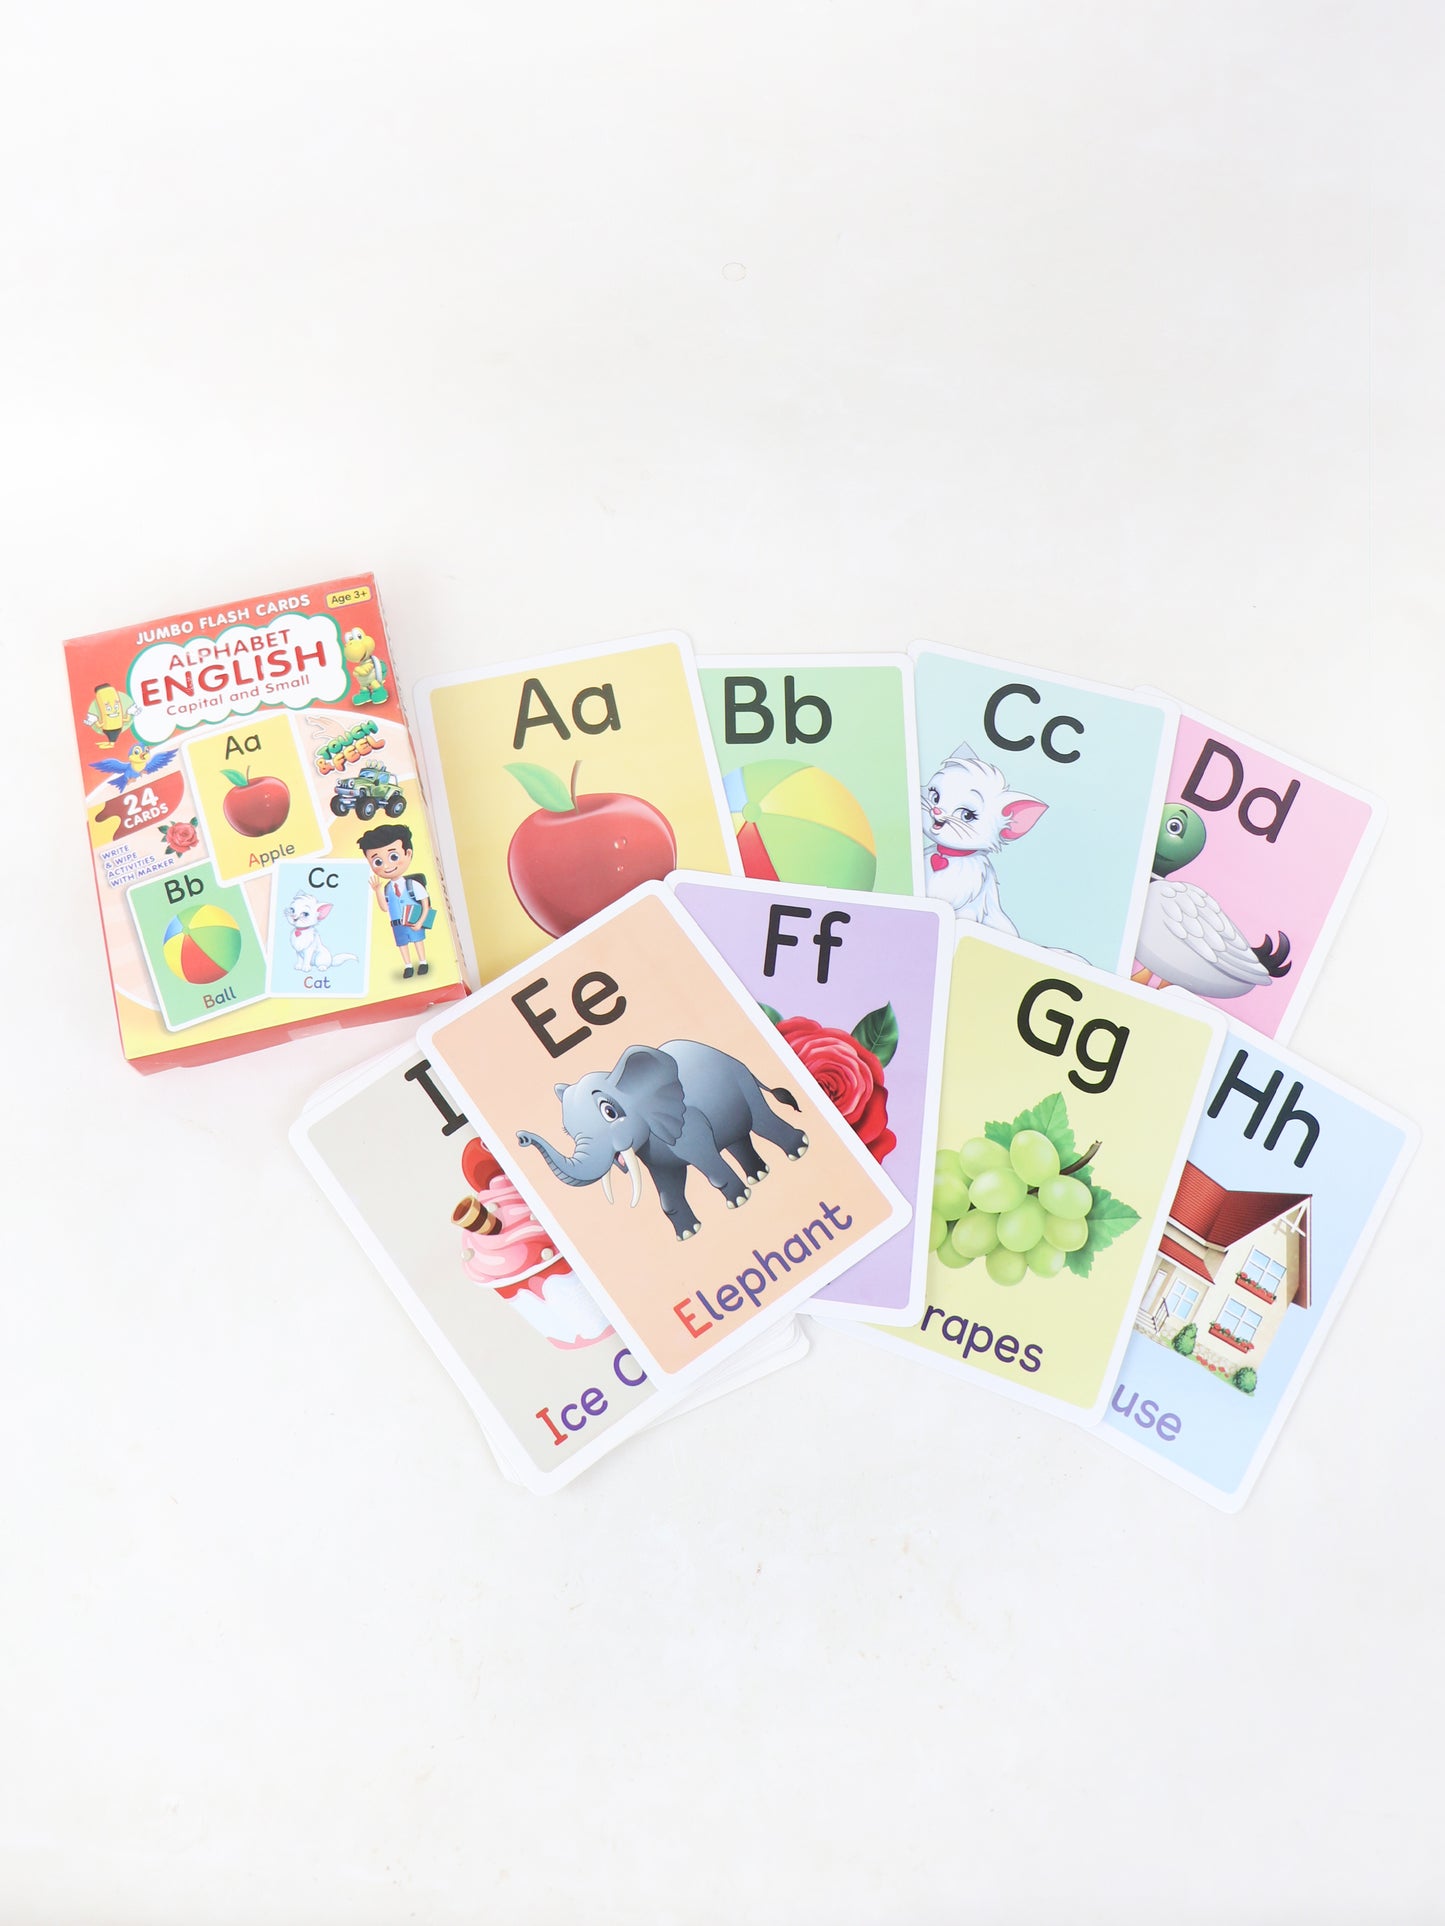 English Alphabets Capital & Small 24 Jumbo Flash Cards